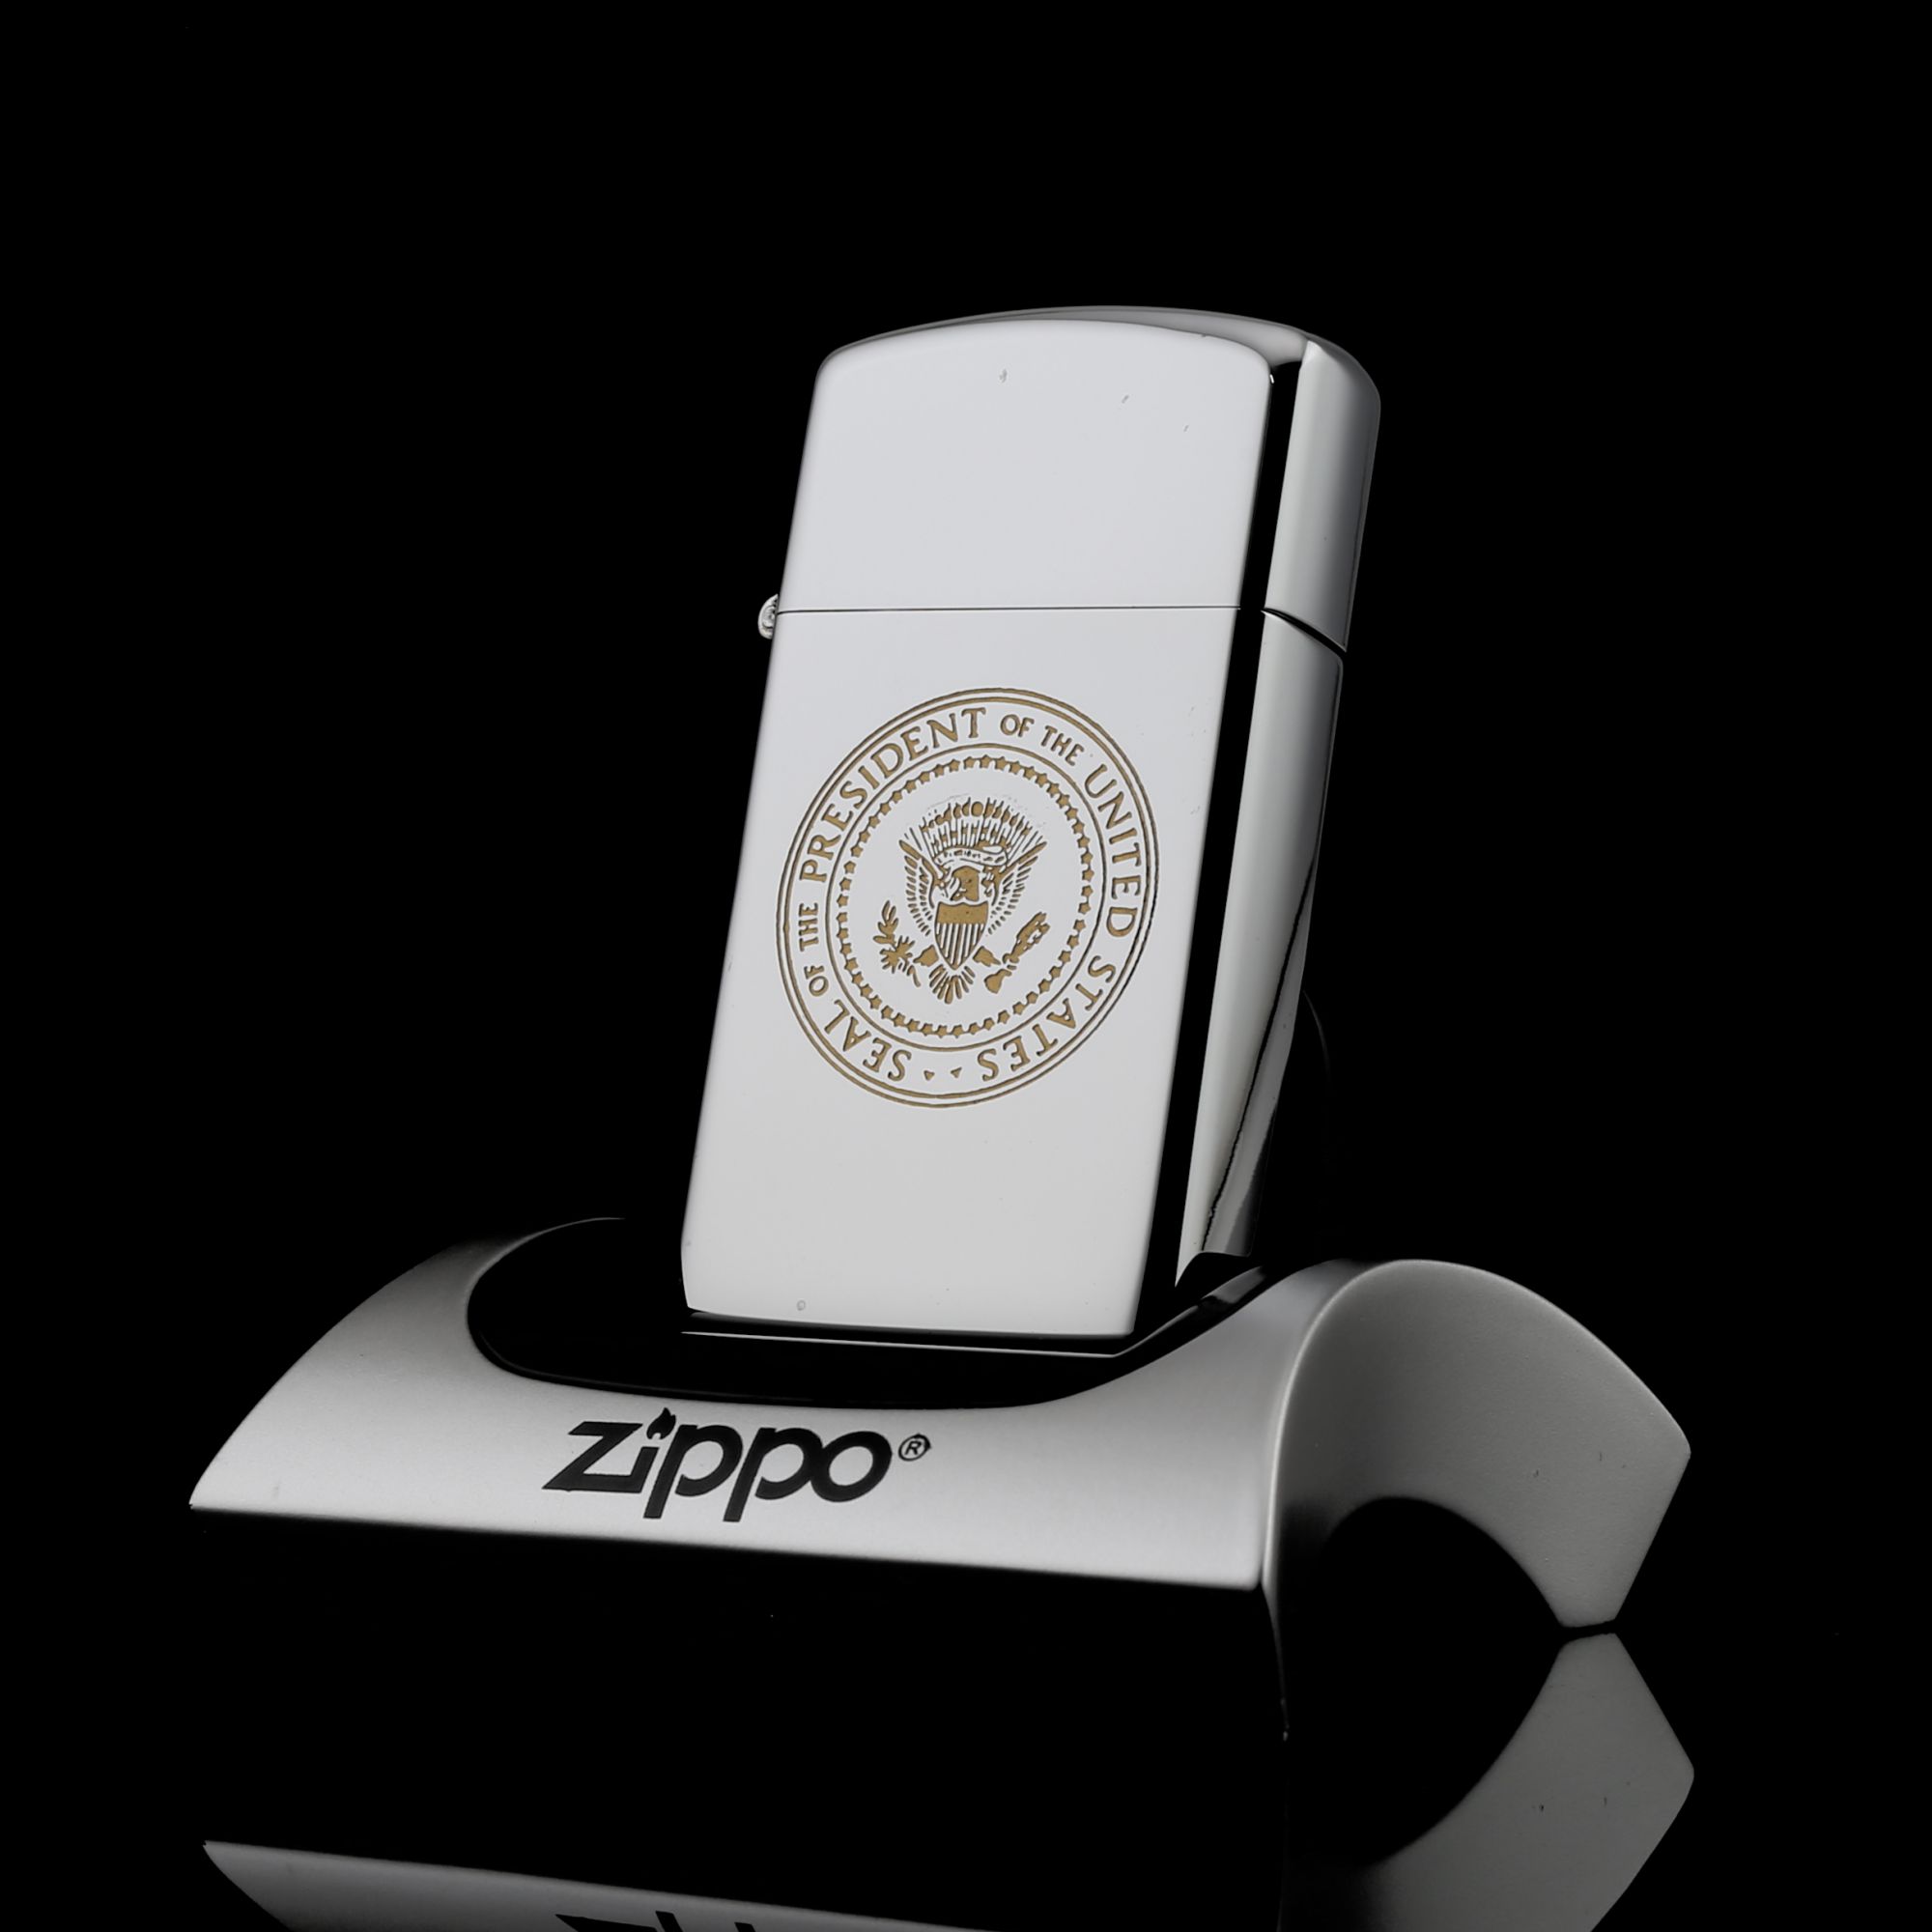 Zippo-GOLD-LOGO-SEAL-of-the-PRESIDENT-of-the-UNITED-STATES-1974-limited-dep-doc-la-zippo-la-ma